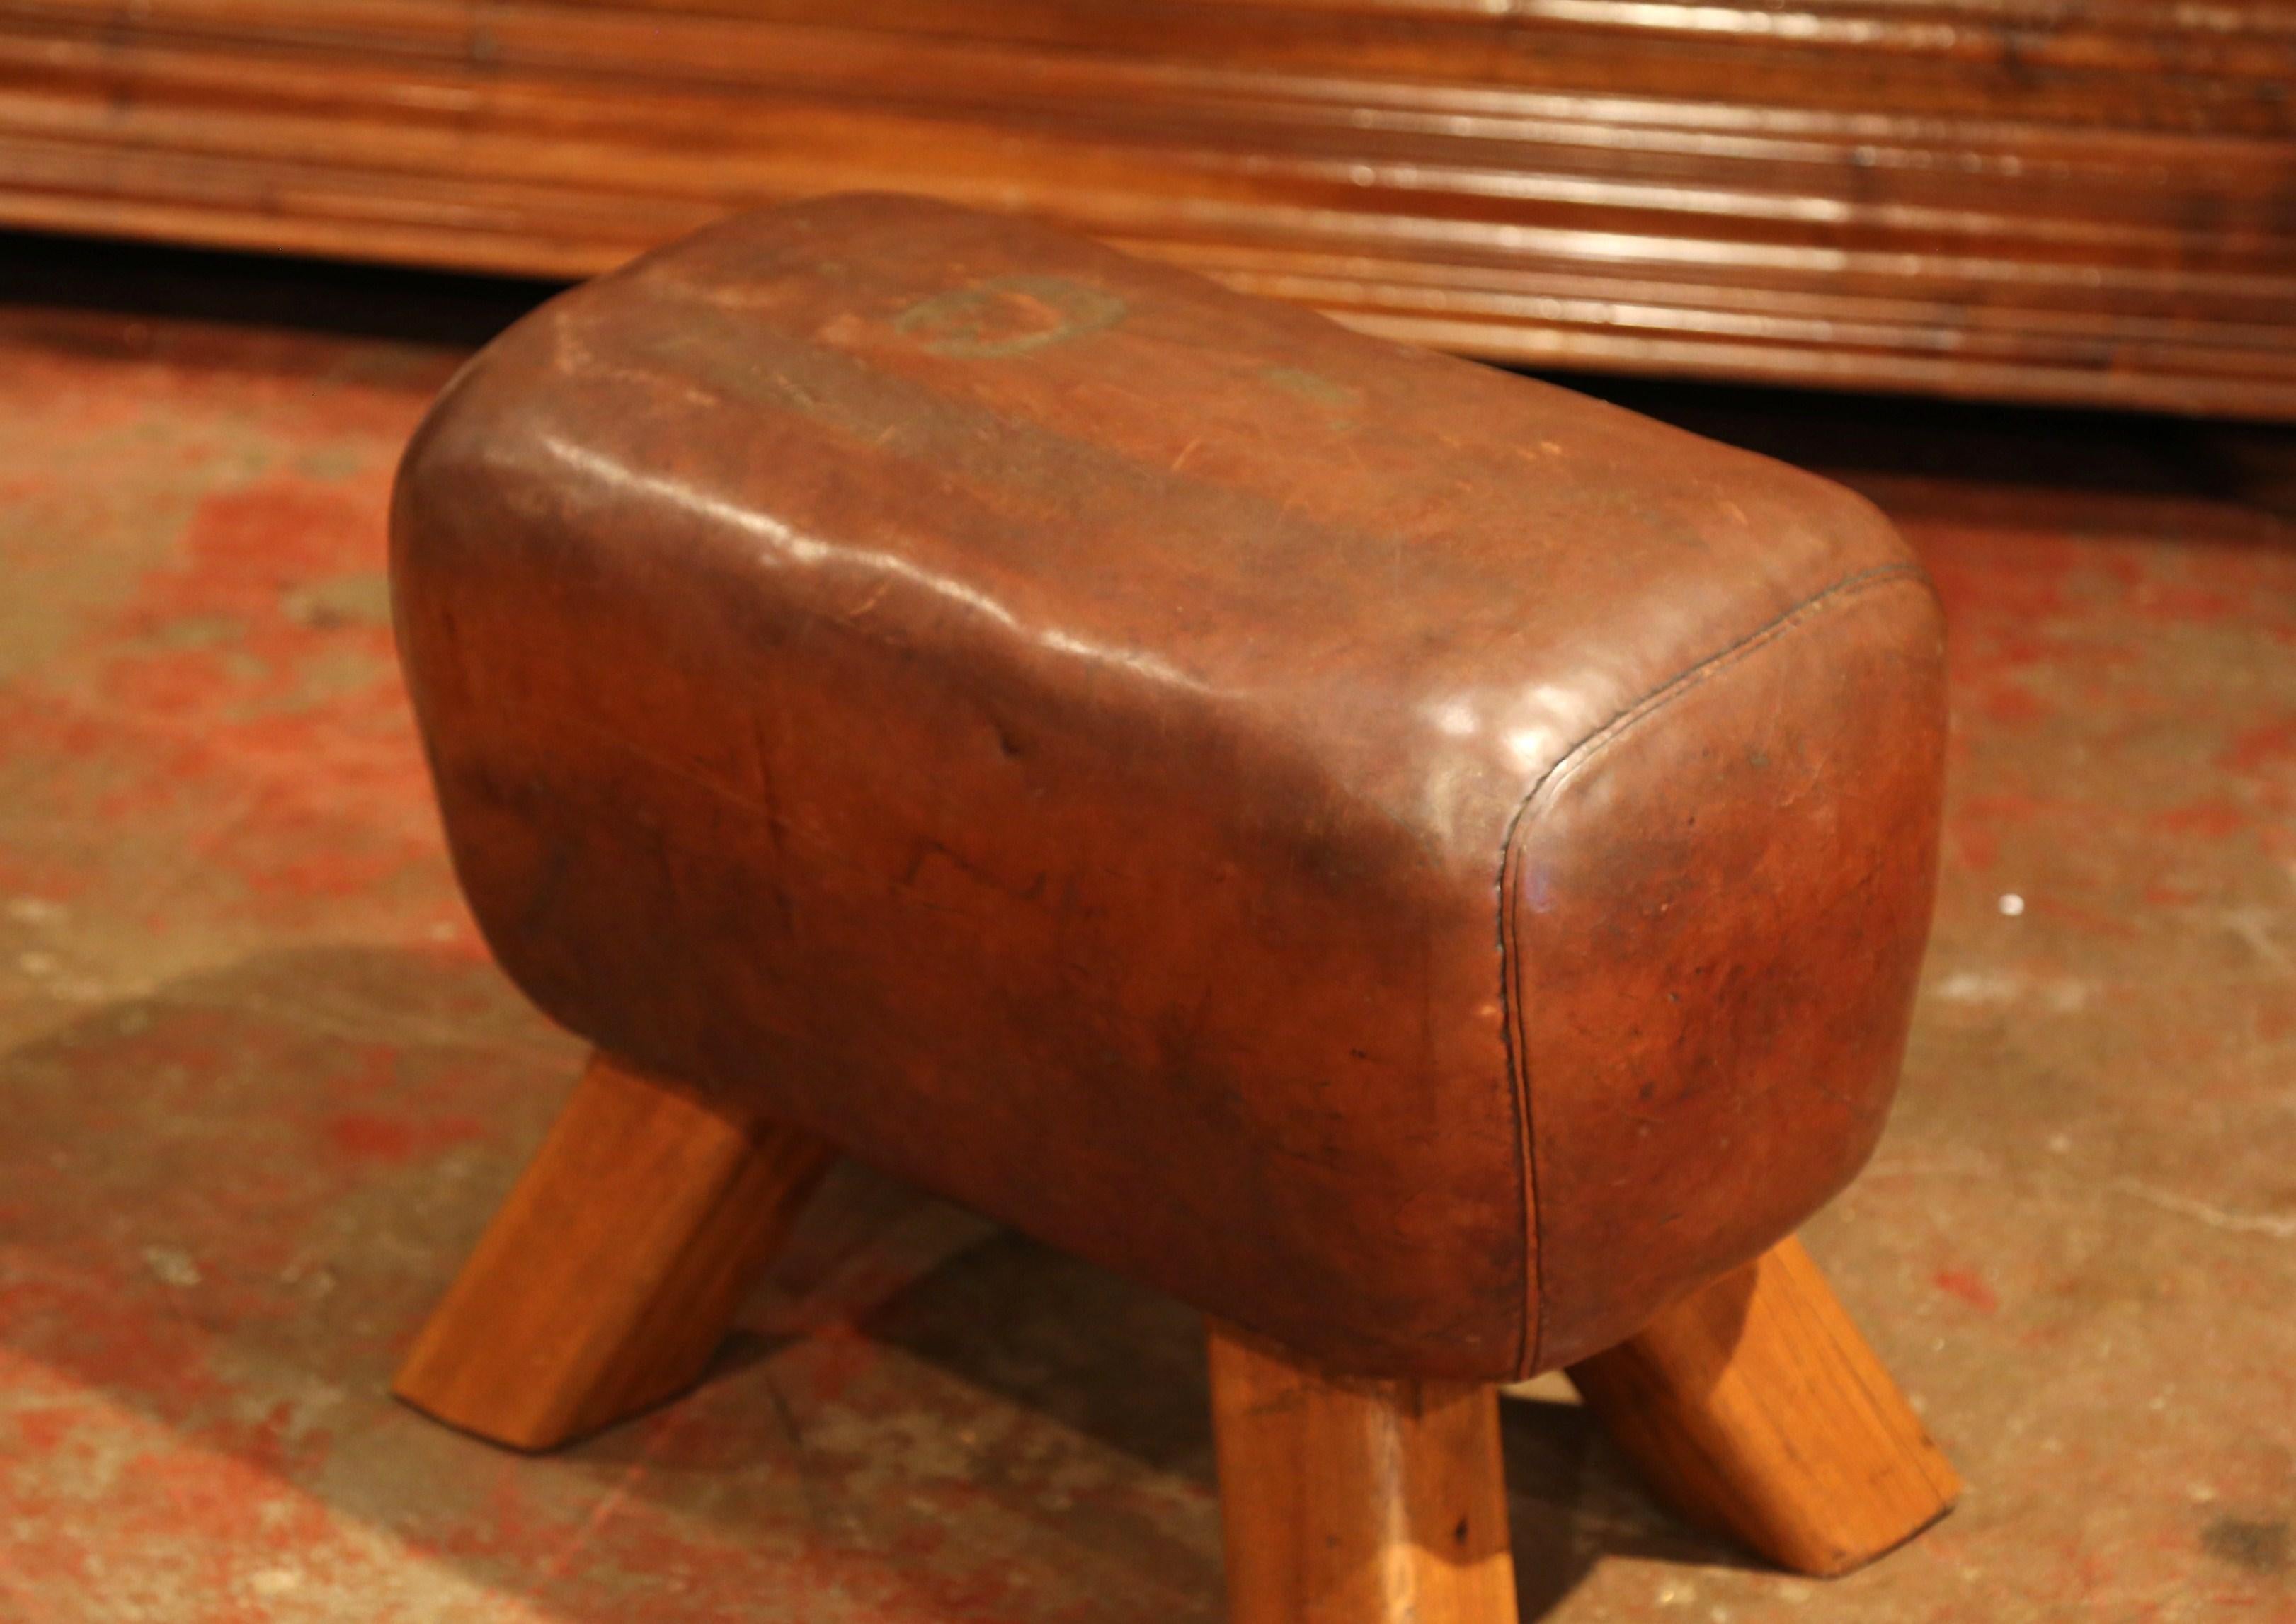 leather pommel stool